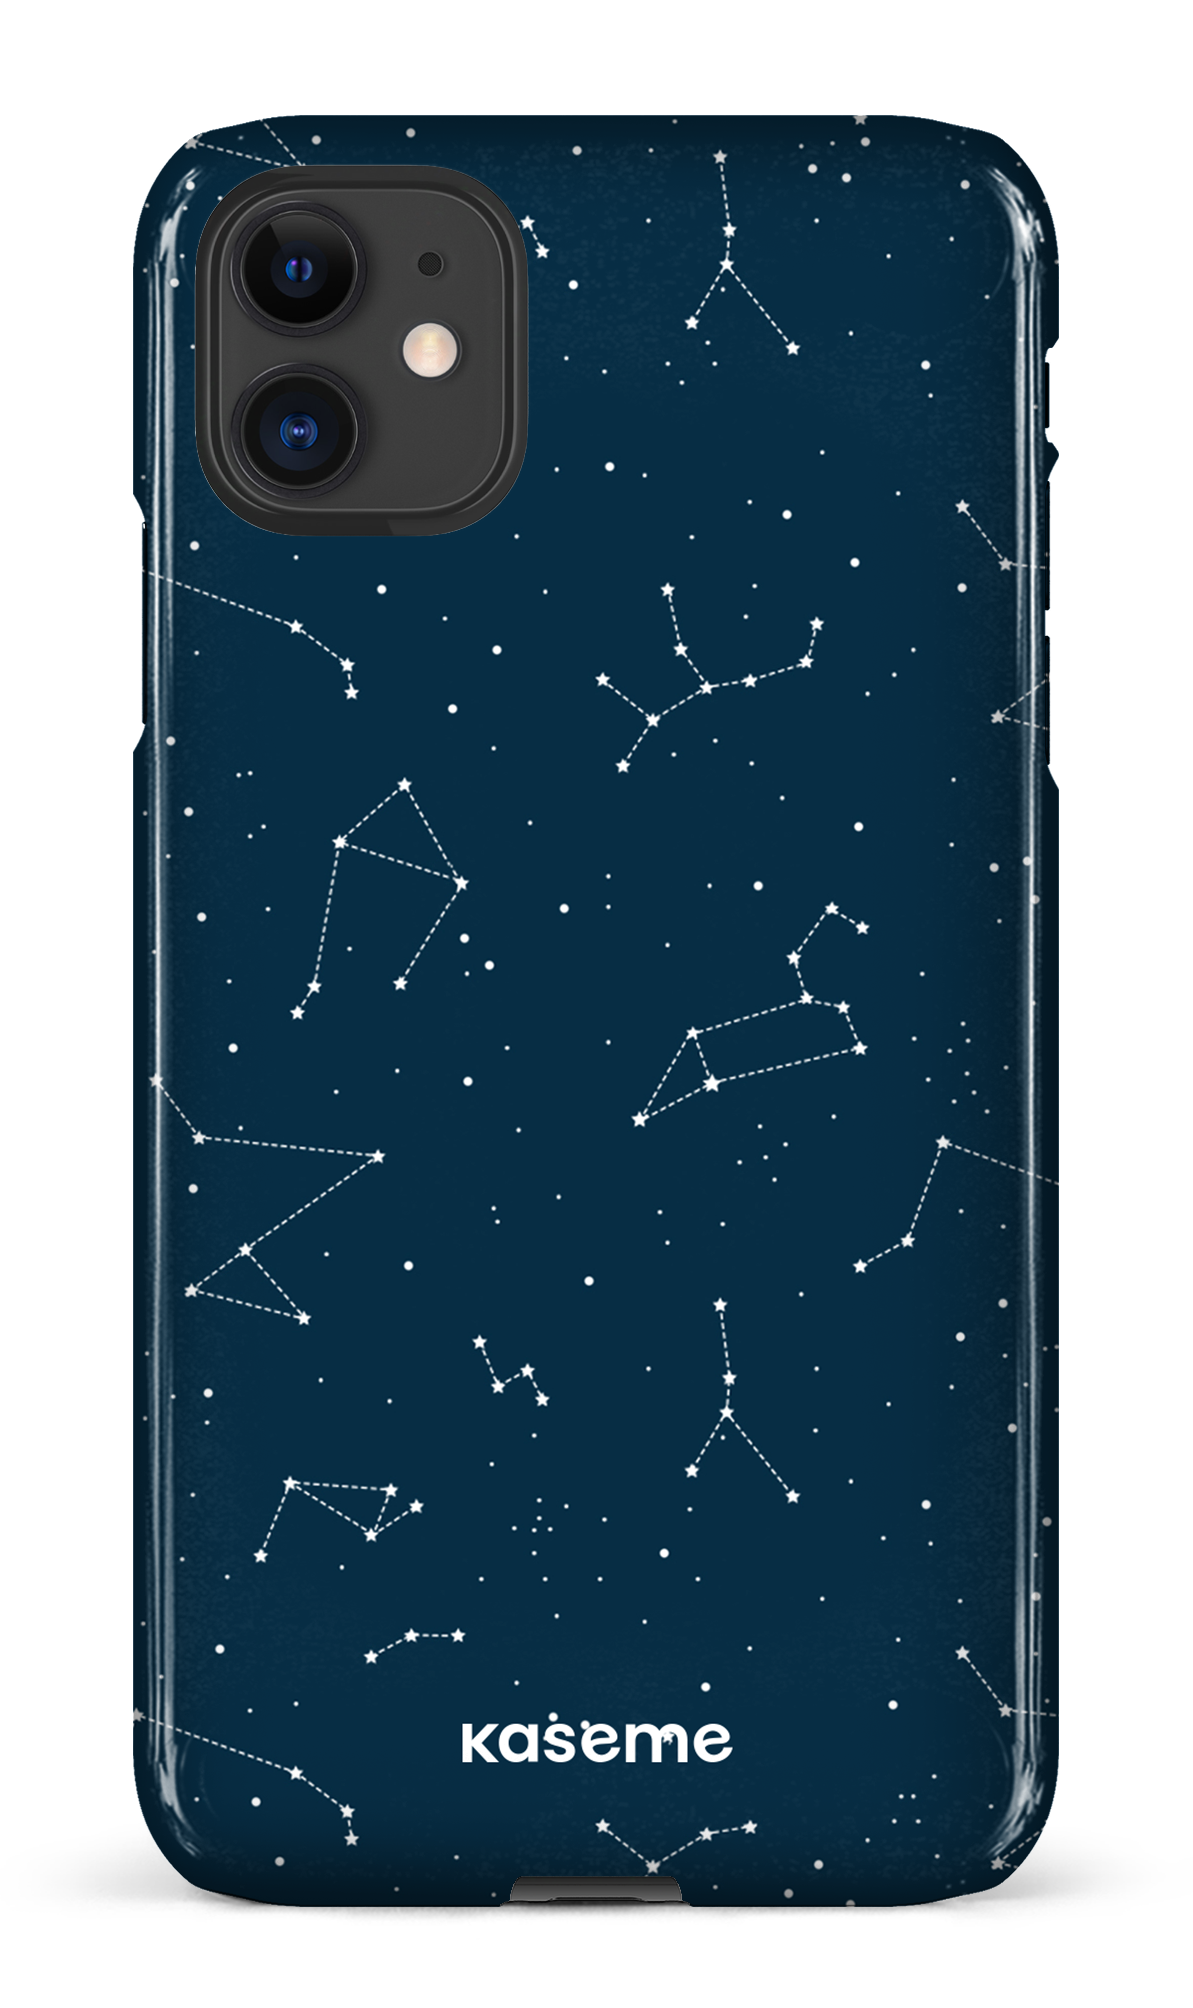 Cosmos - iPhone 11